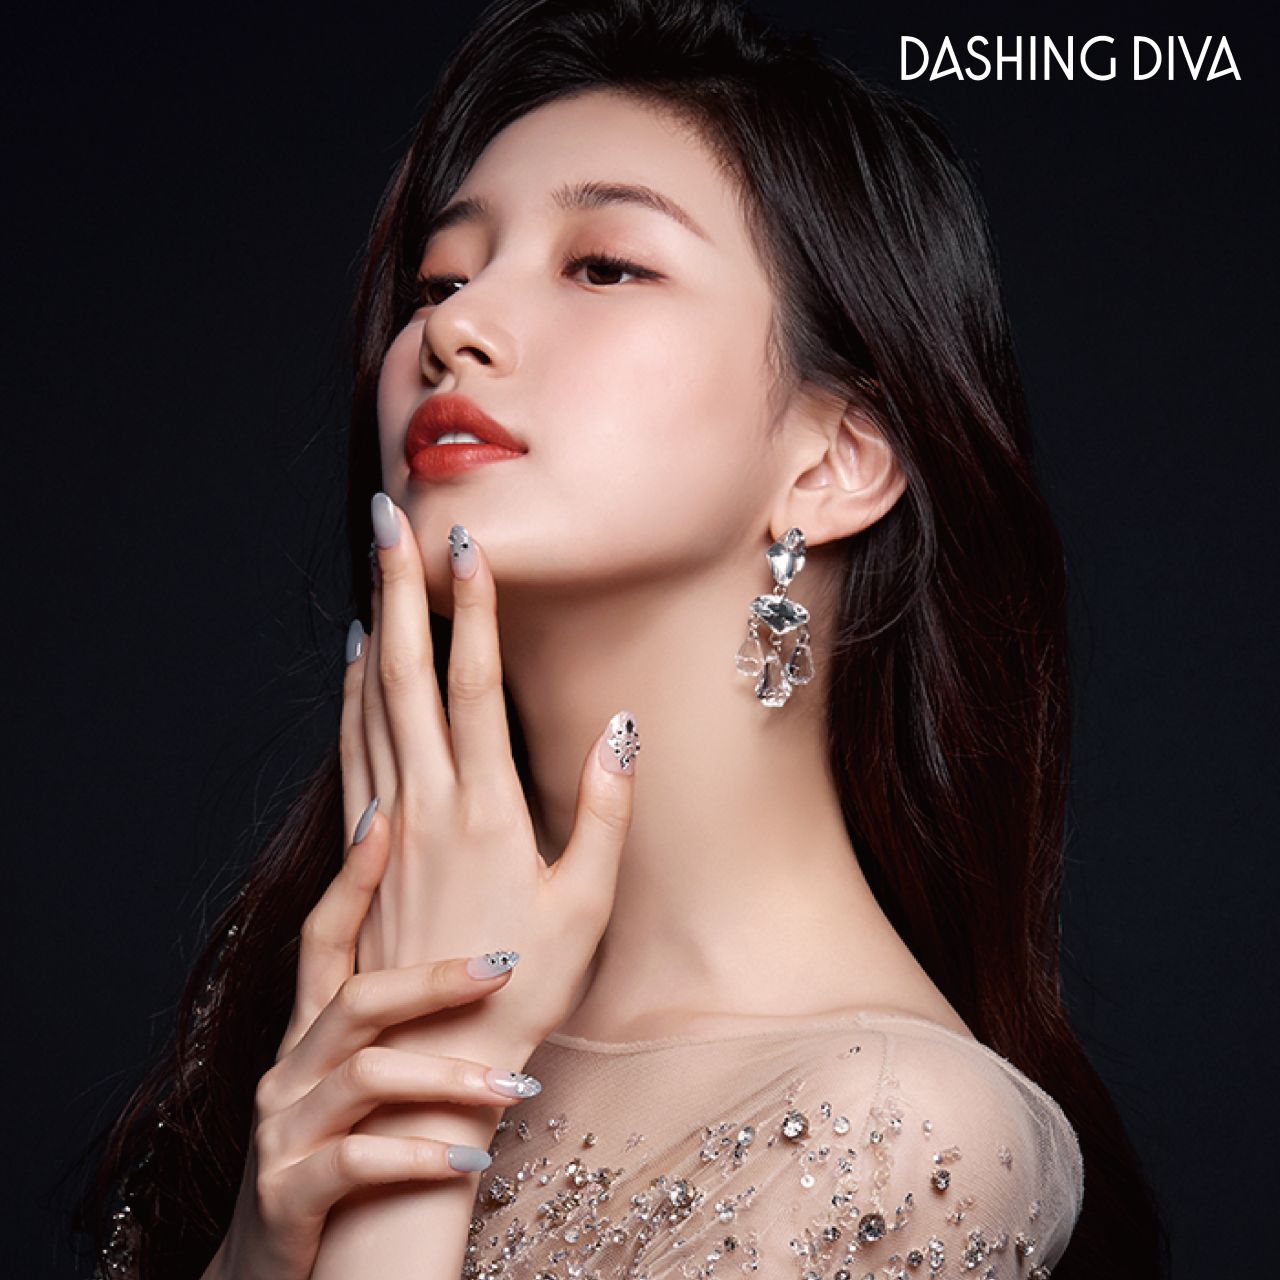 Suzy - "Dashing Diva" Commercial Photoshoot 2020.